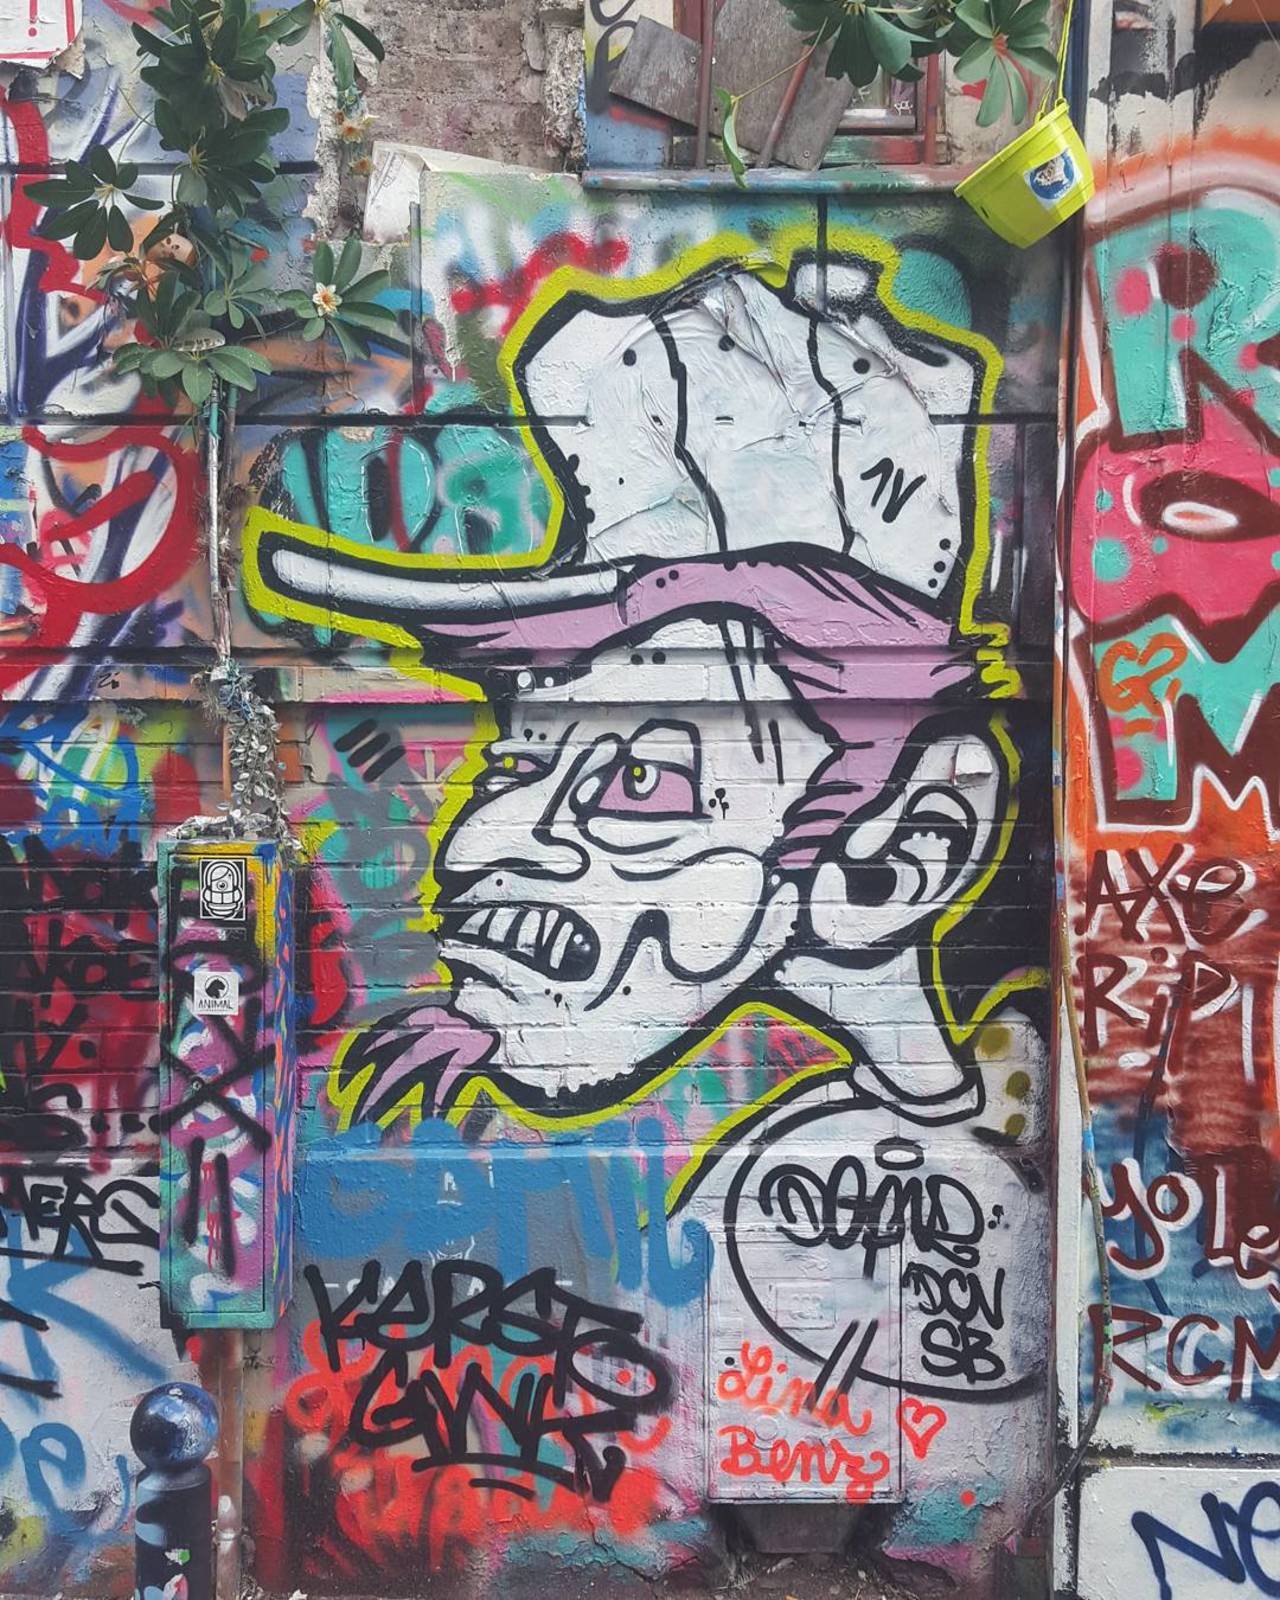 #Paris #graffiti photo by @jdewey67 http://ift.tt/1KWZKtW #StreetArt http://t.co/JA1kixoyJa